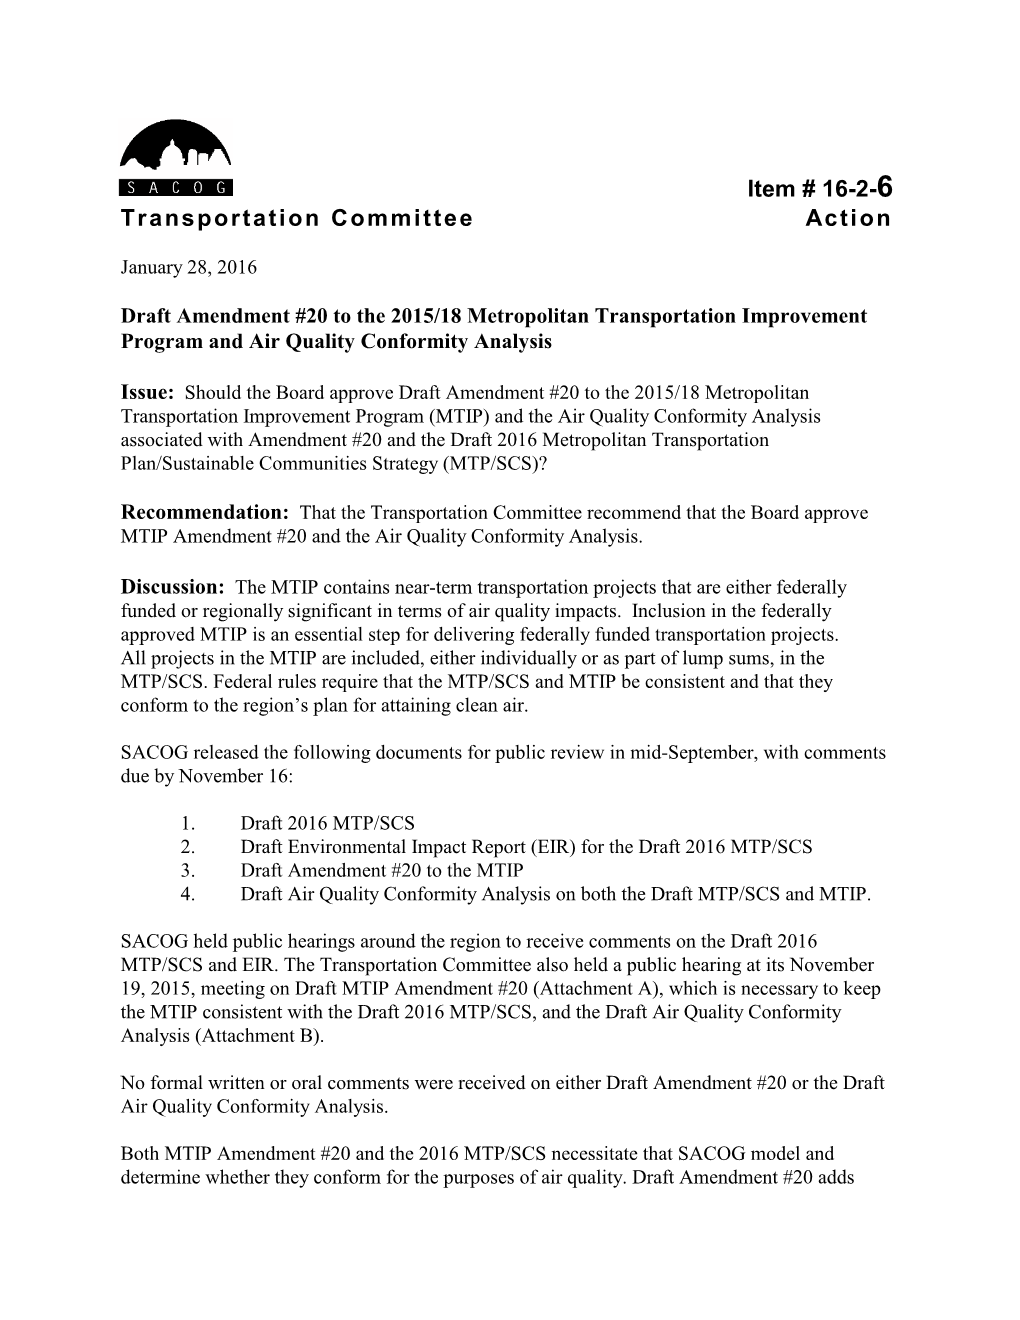 Draft Amendment #20 to the 2015/18 Metropolitan Transportation Improvement Program and Air Quality Conformity Analysis